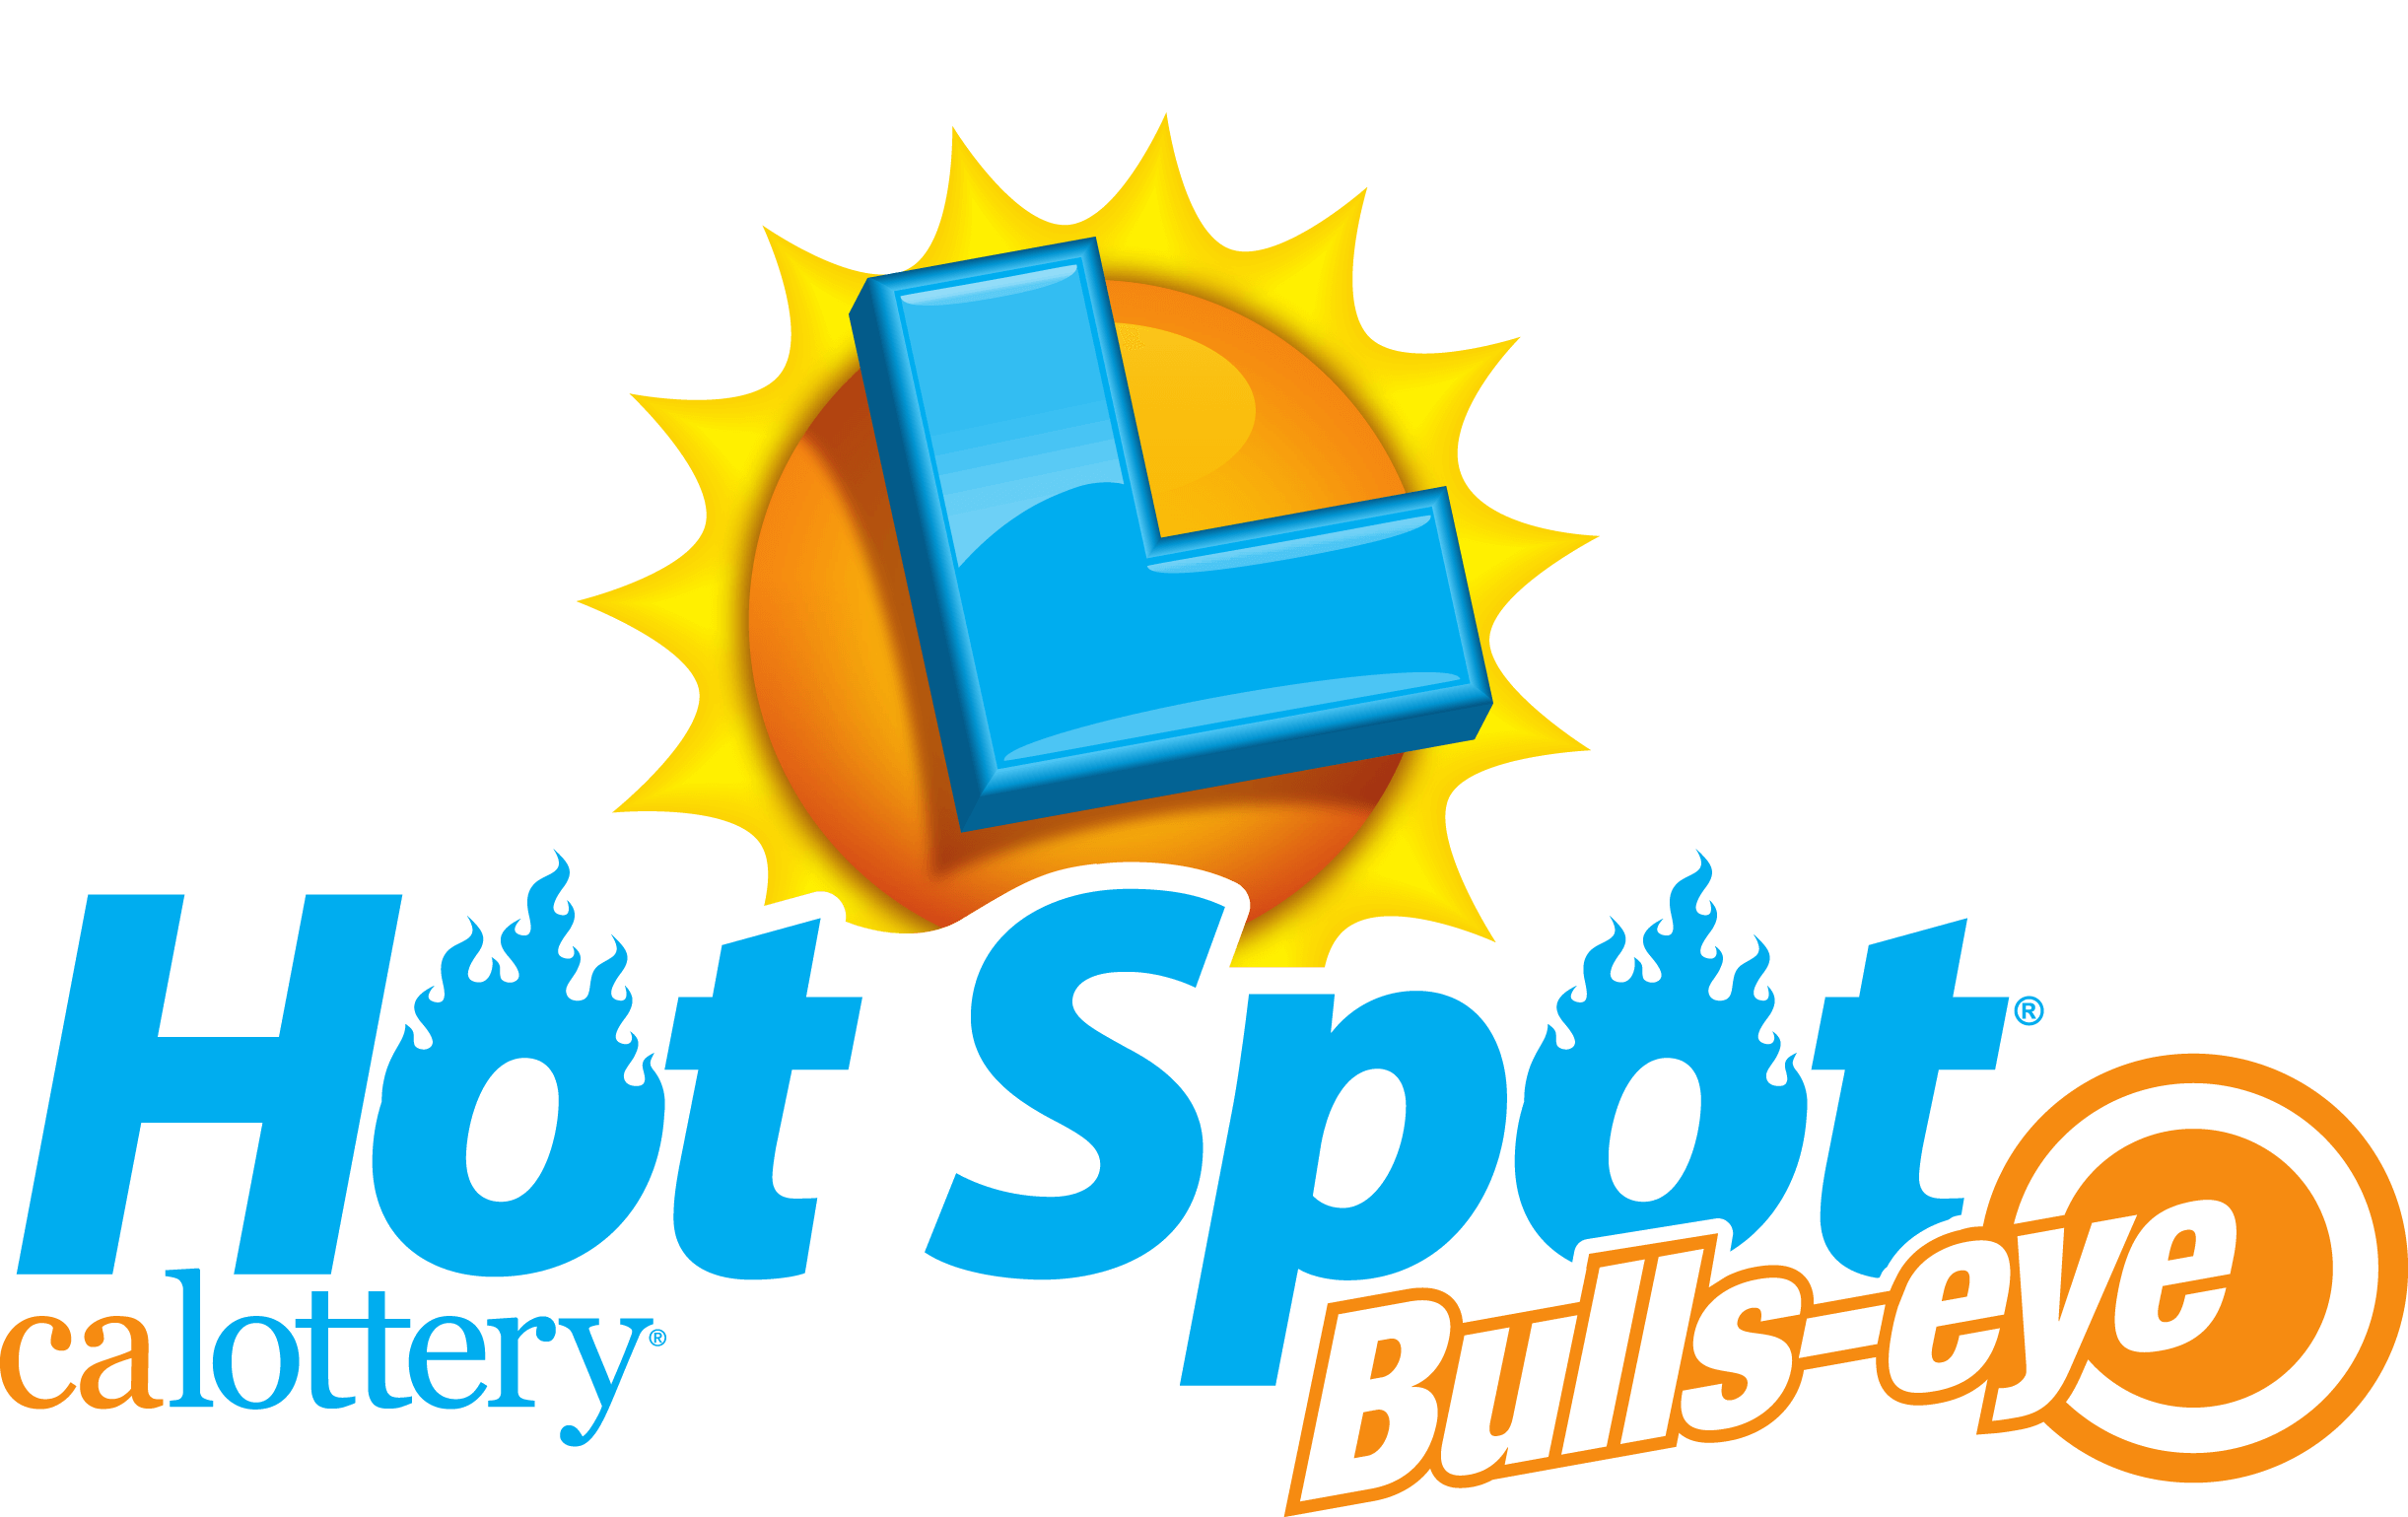 Hot Spot Bulls-eye, calottery